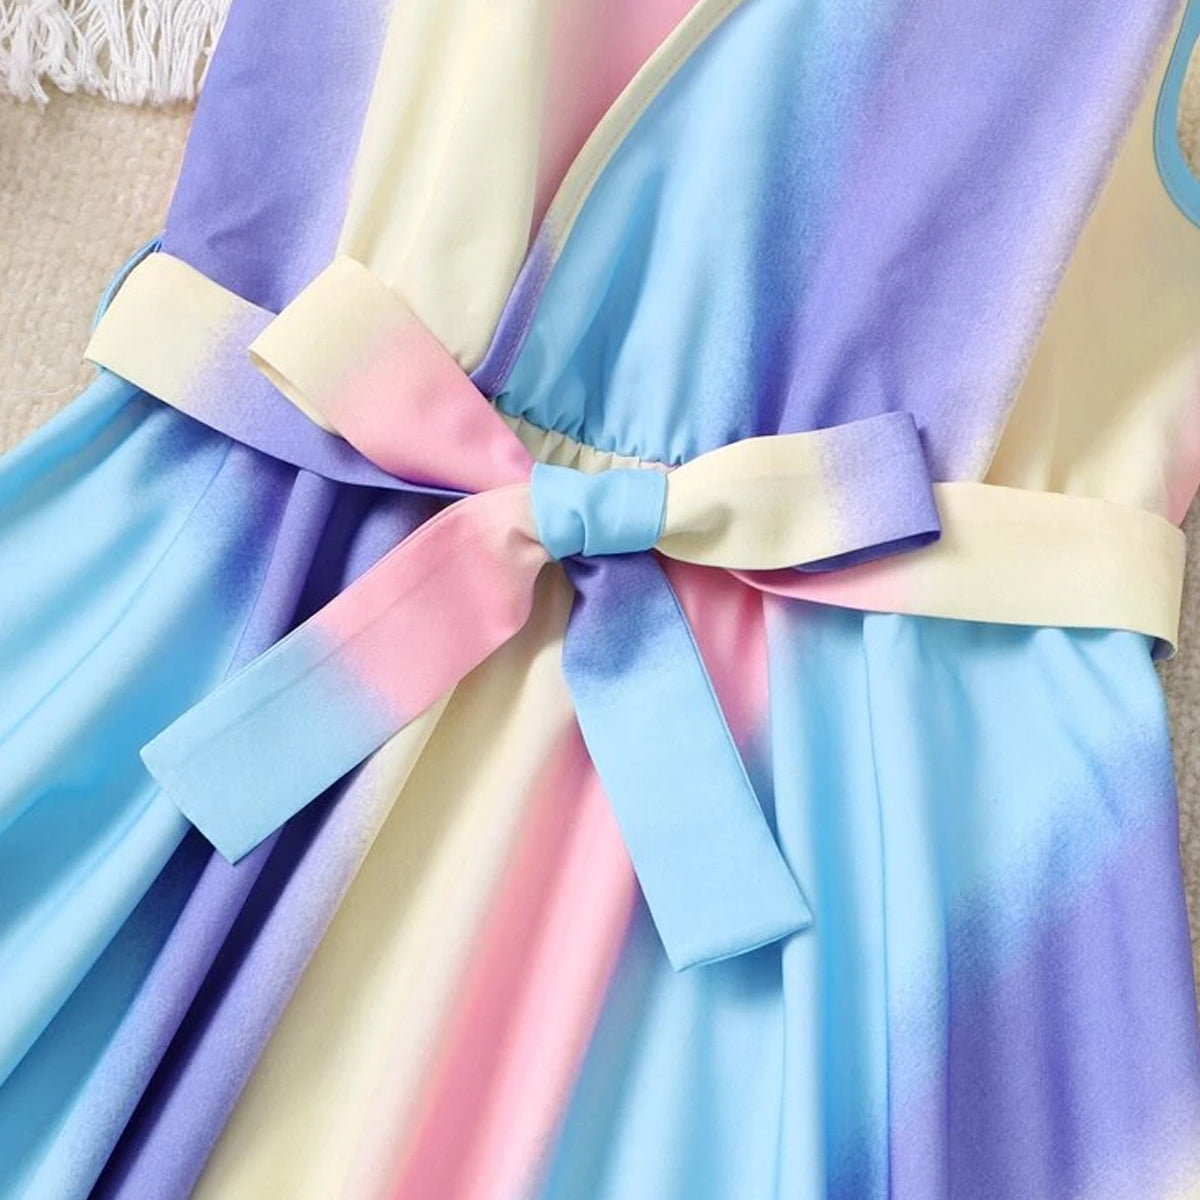 Baby Girl Fashion Wear Stylish Hanky Hem Belted Cami Designer Frocks & Dresses for Kid.